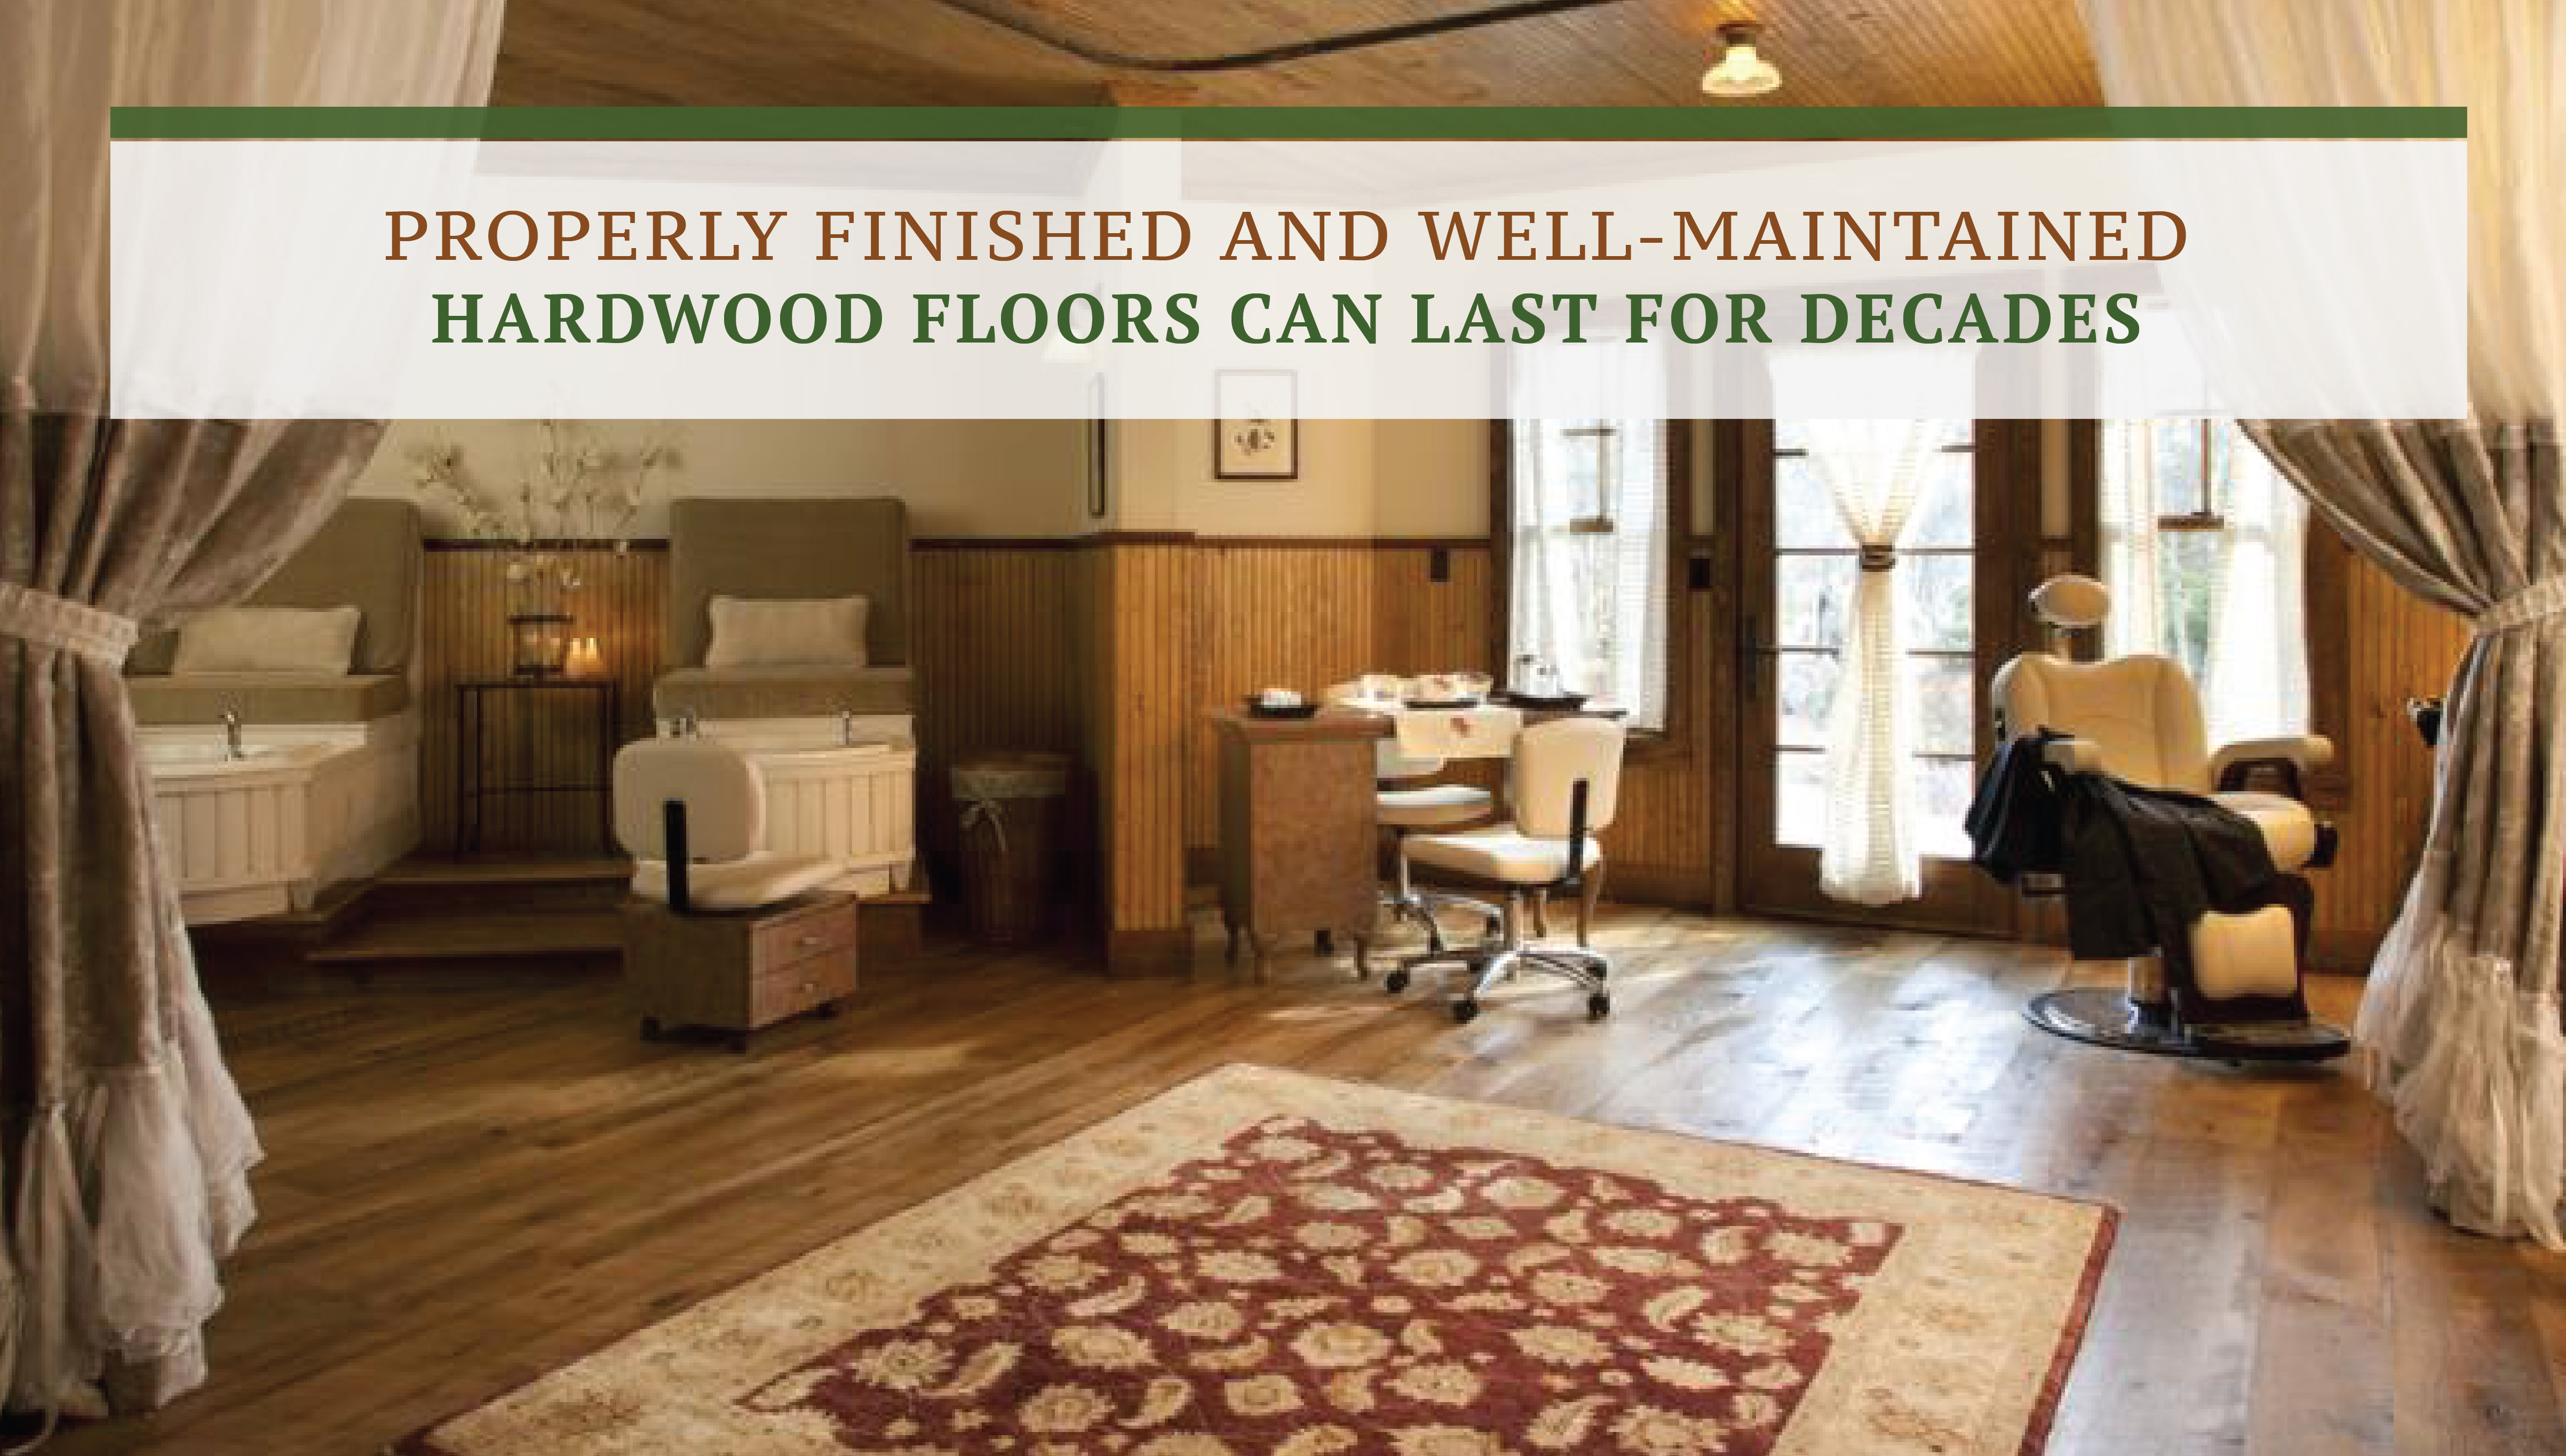 Hardwood Floors Can Last for Decades